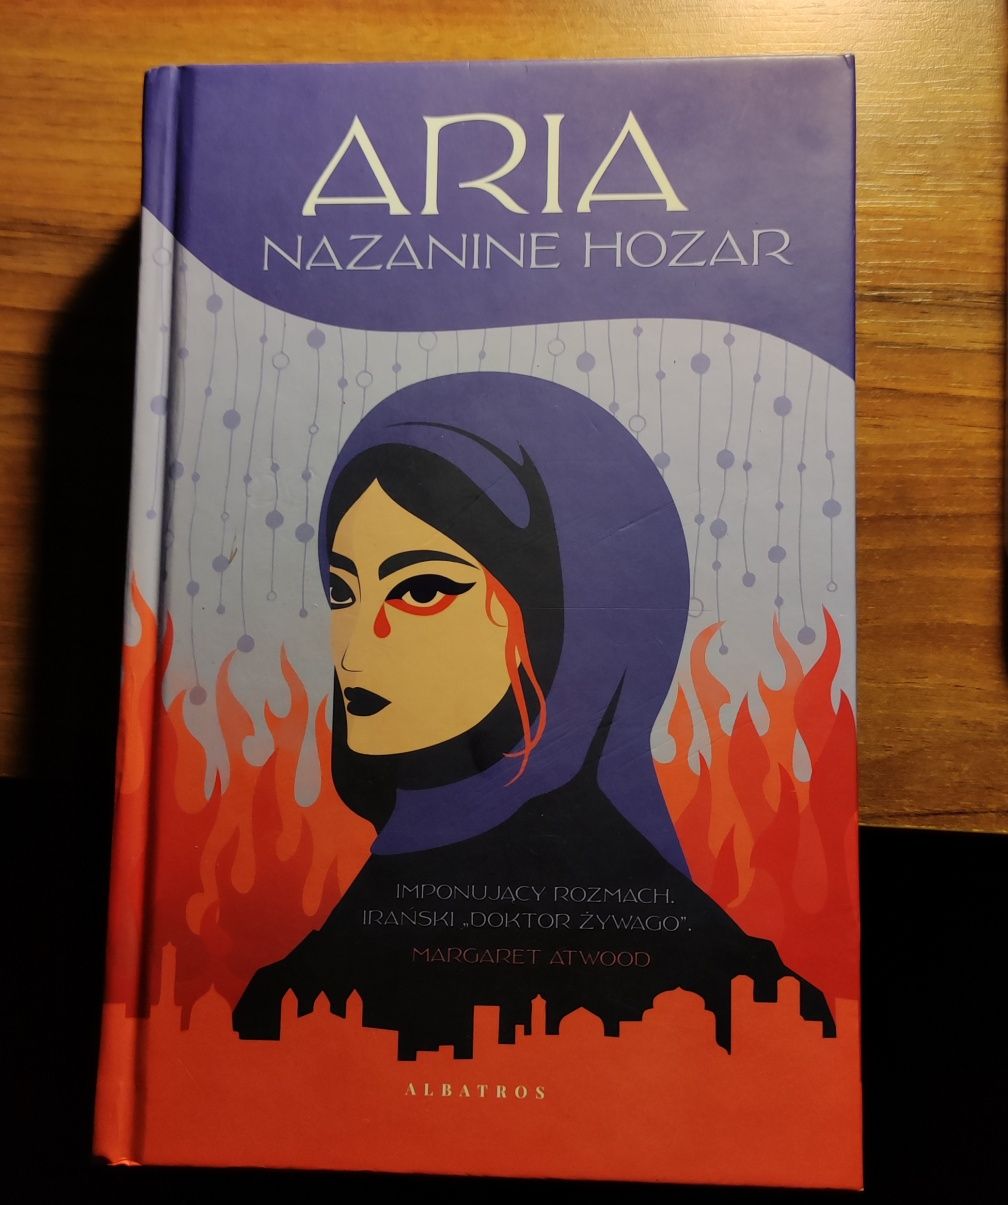 "Aria" - Nazanine Hozar